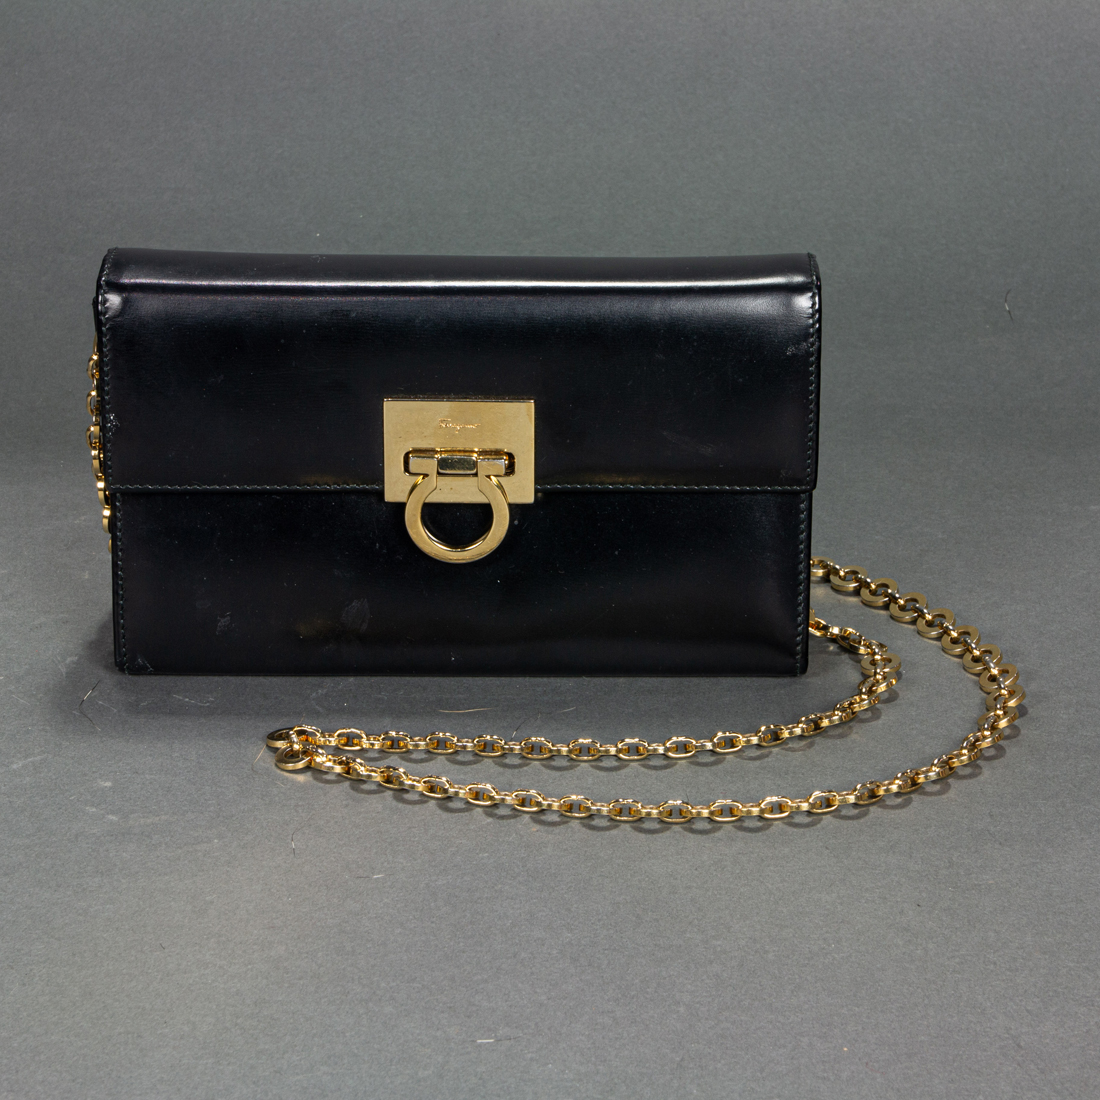 Salvatore Ferragamo black leather chain link shoulder bag with 